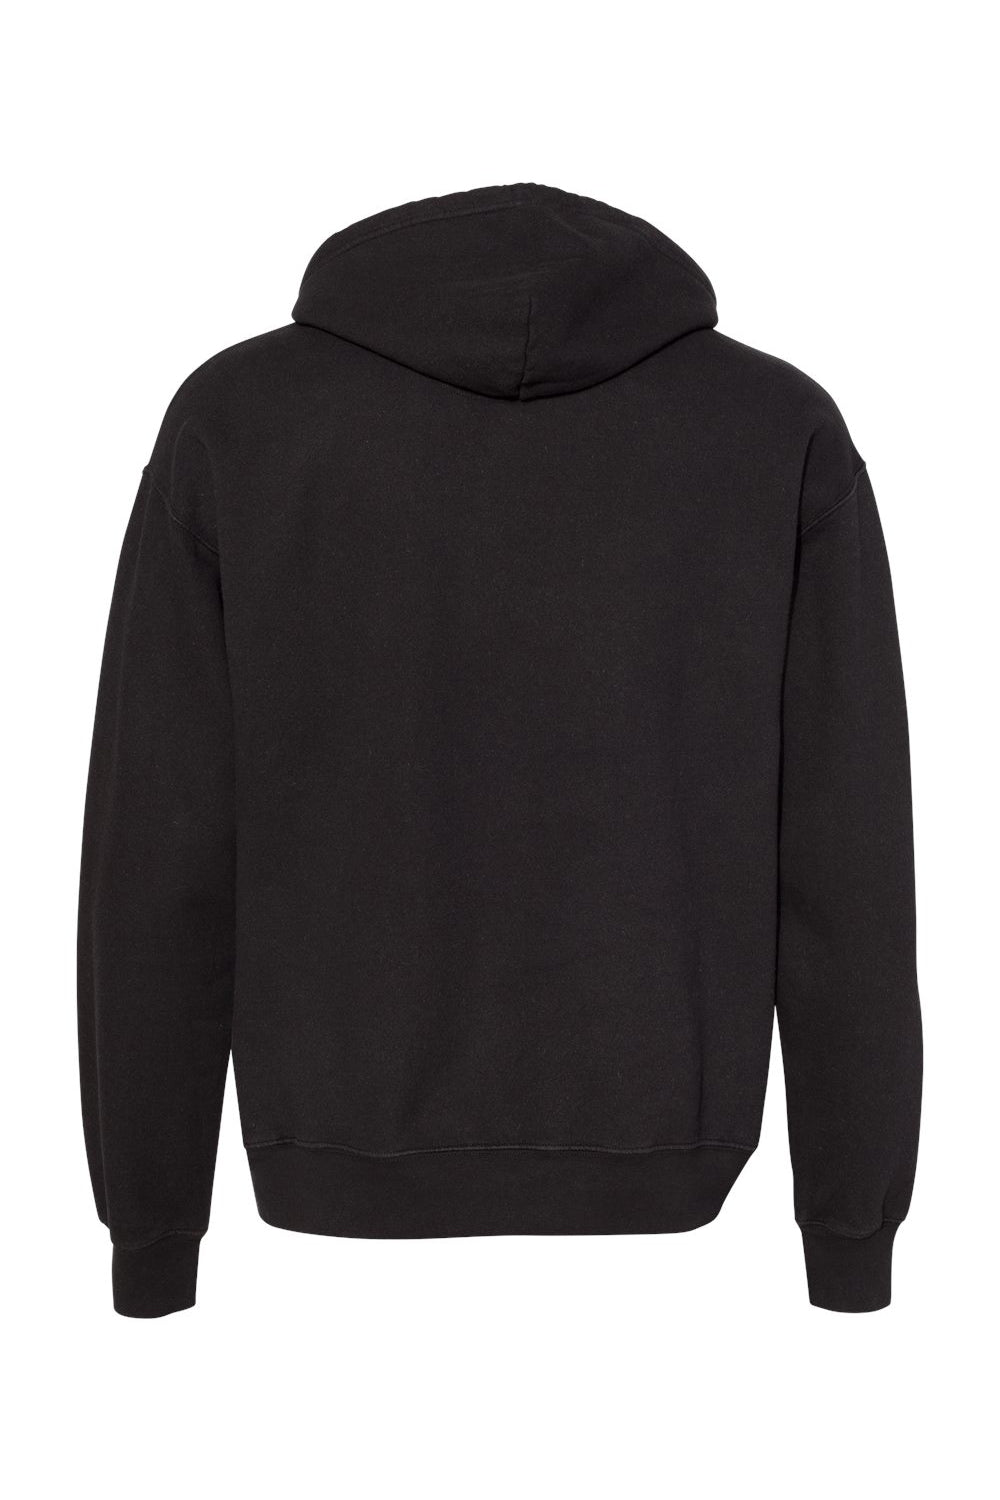 Champion CD450 Mens Garment Dyed Hooded Sweatshirt Hoodie Black Flat Back